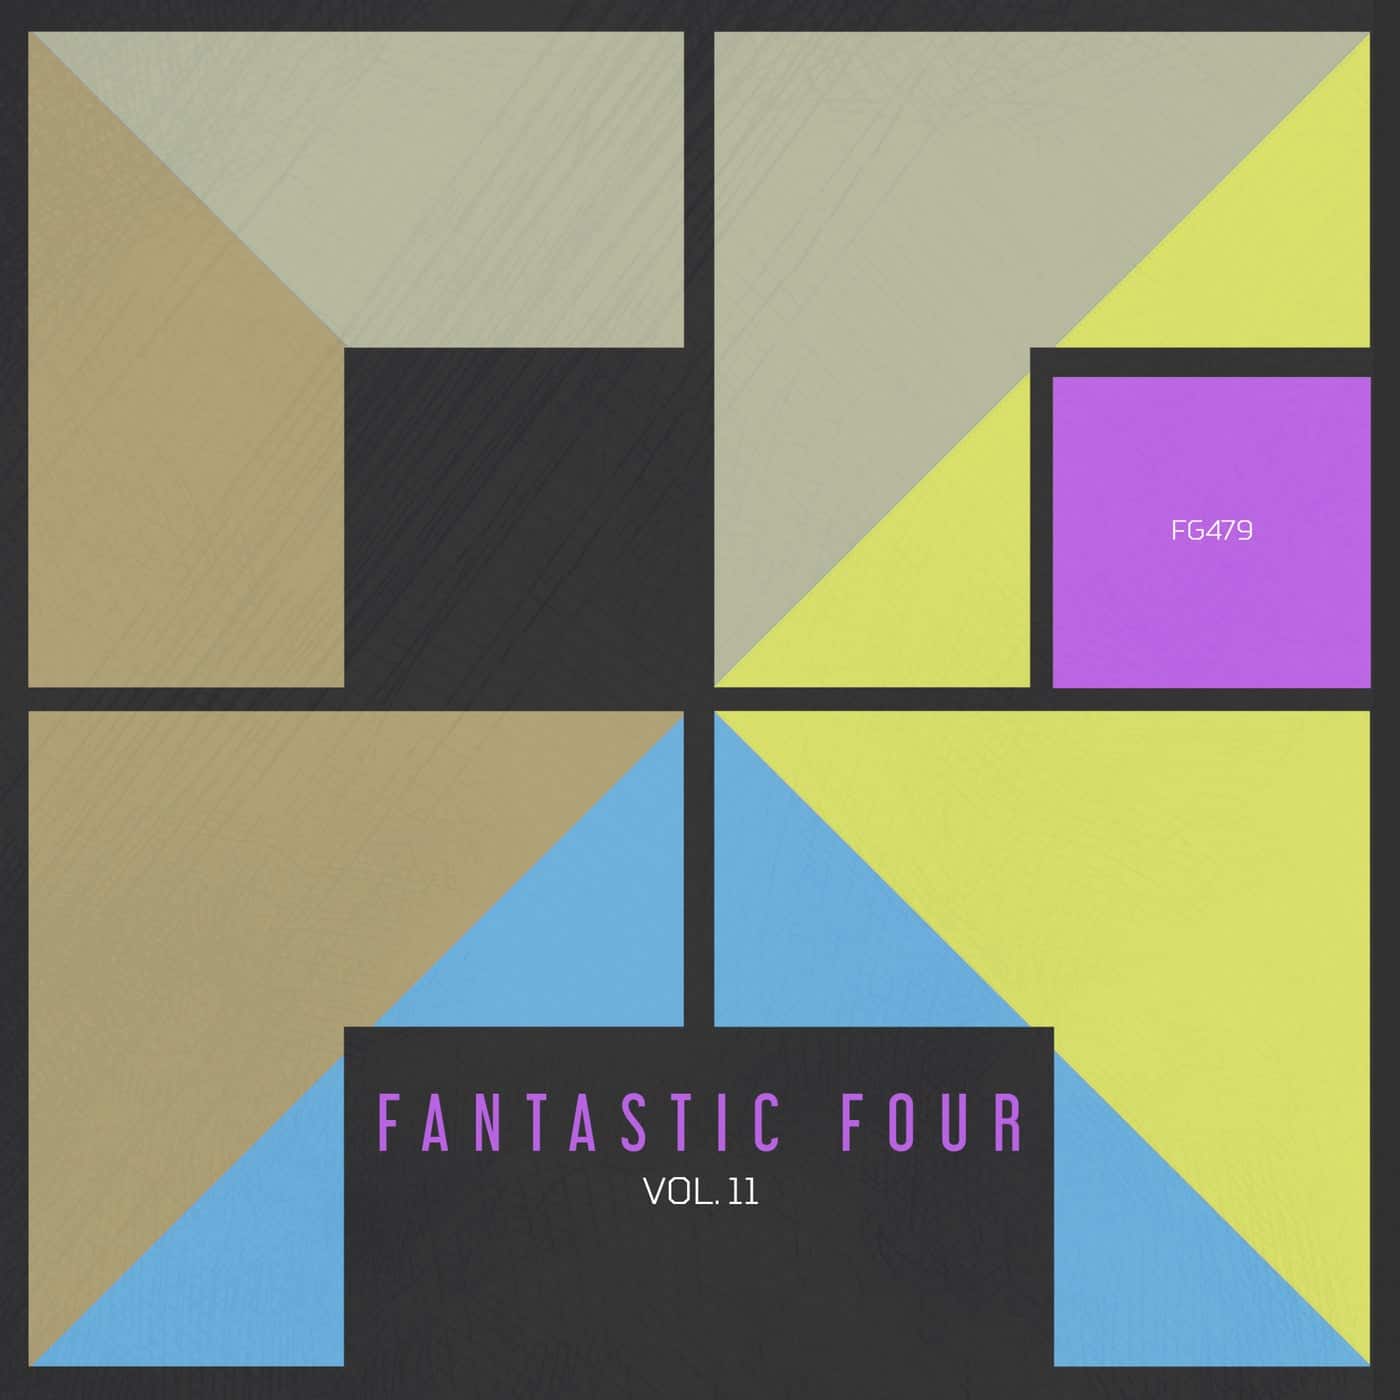 image cover: VA - Fantastic Four, Vol. 11 / FG479